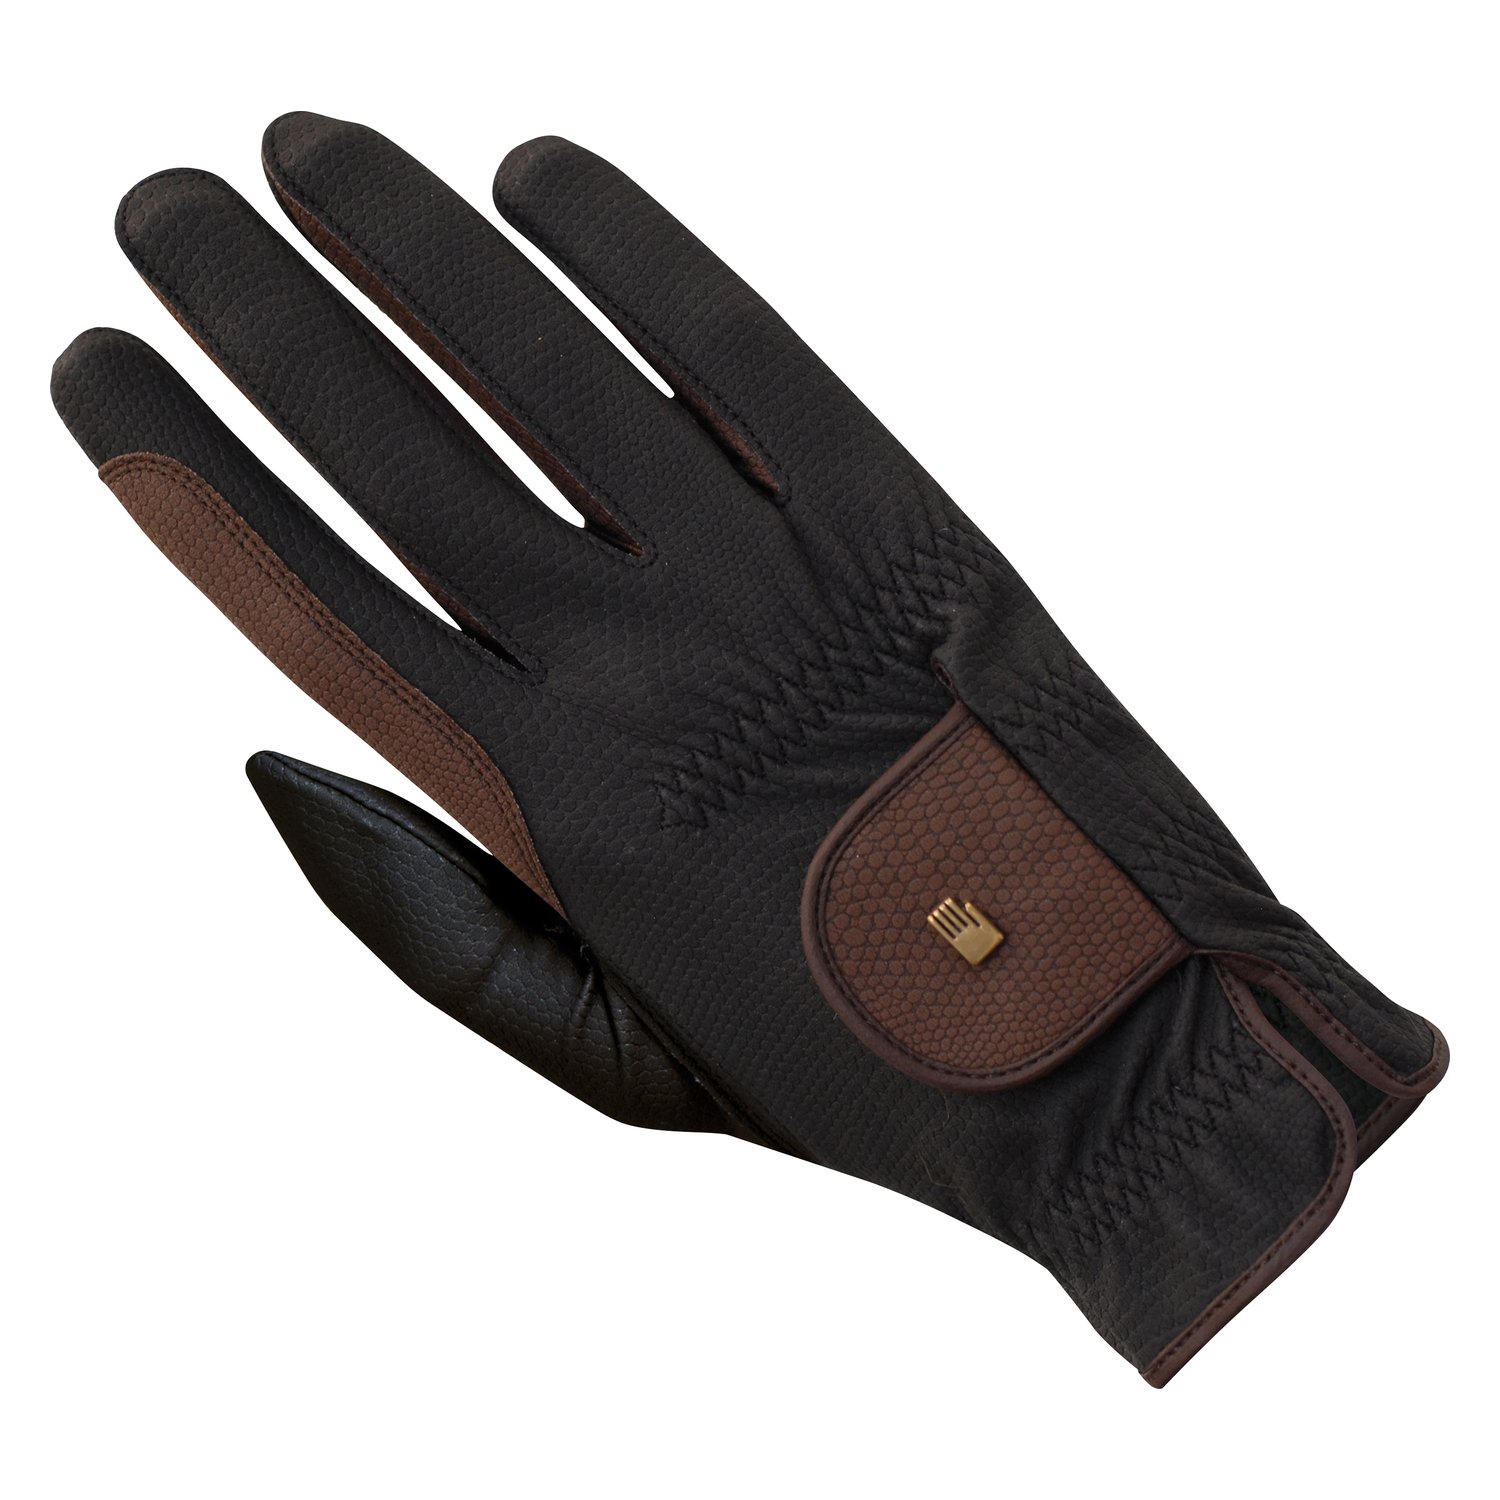 Roeckl Handschuhe Malta Winter schwarz/mokka | 8,5